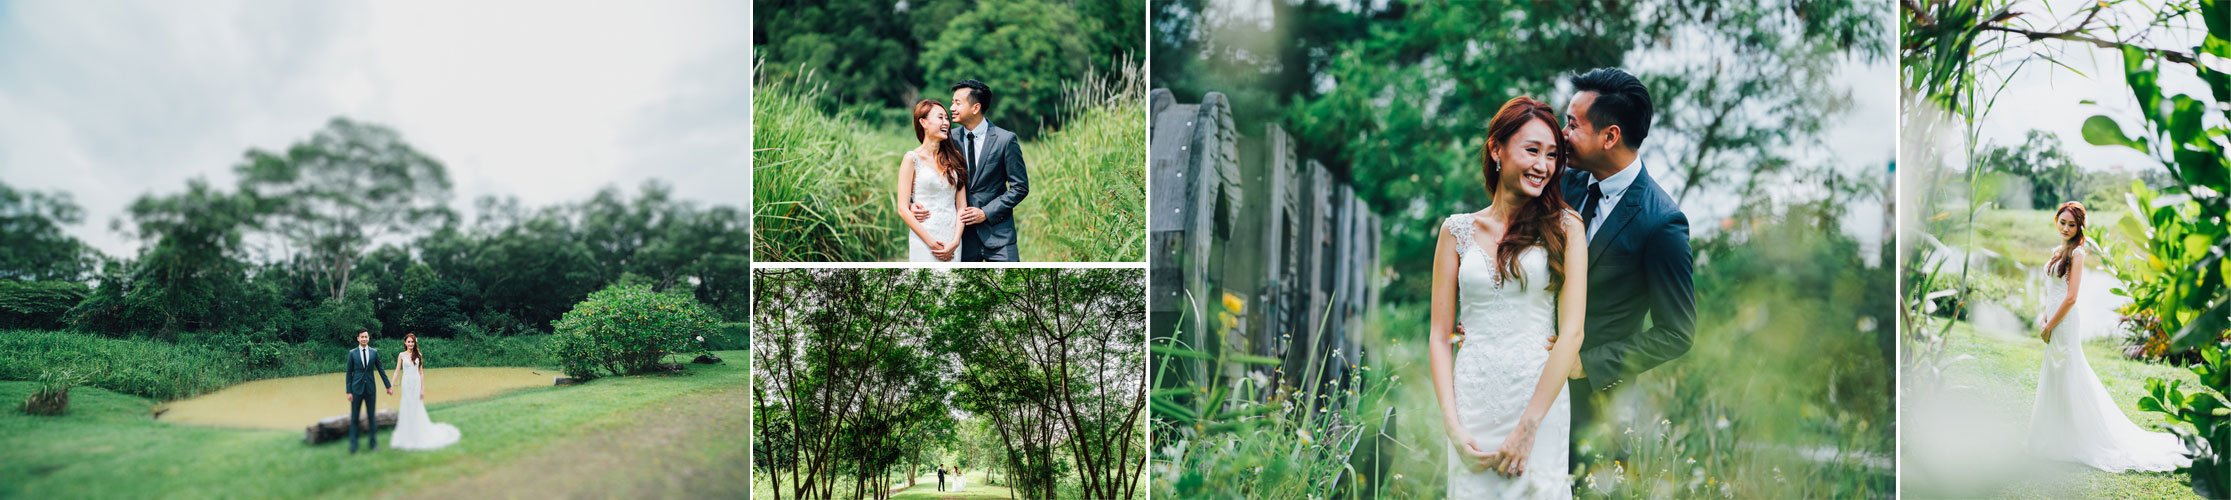 Kent-Ridge-Park-singapore-wedding